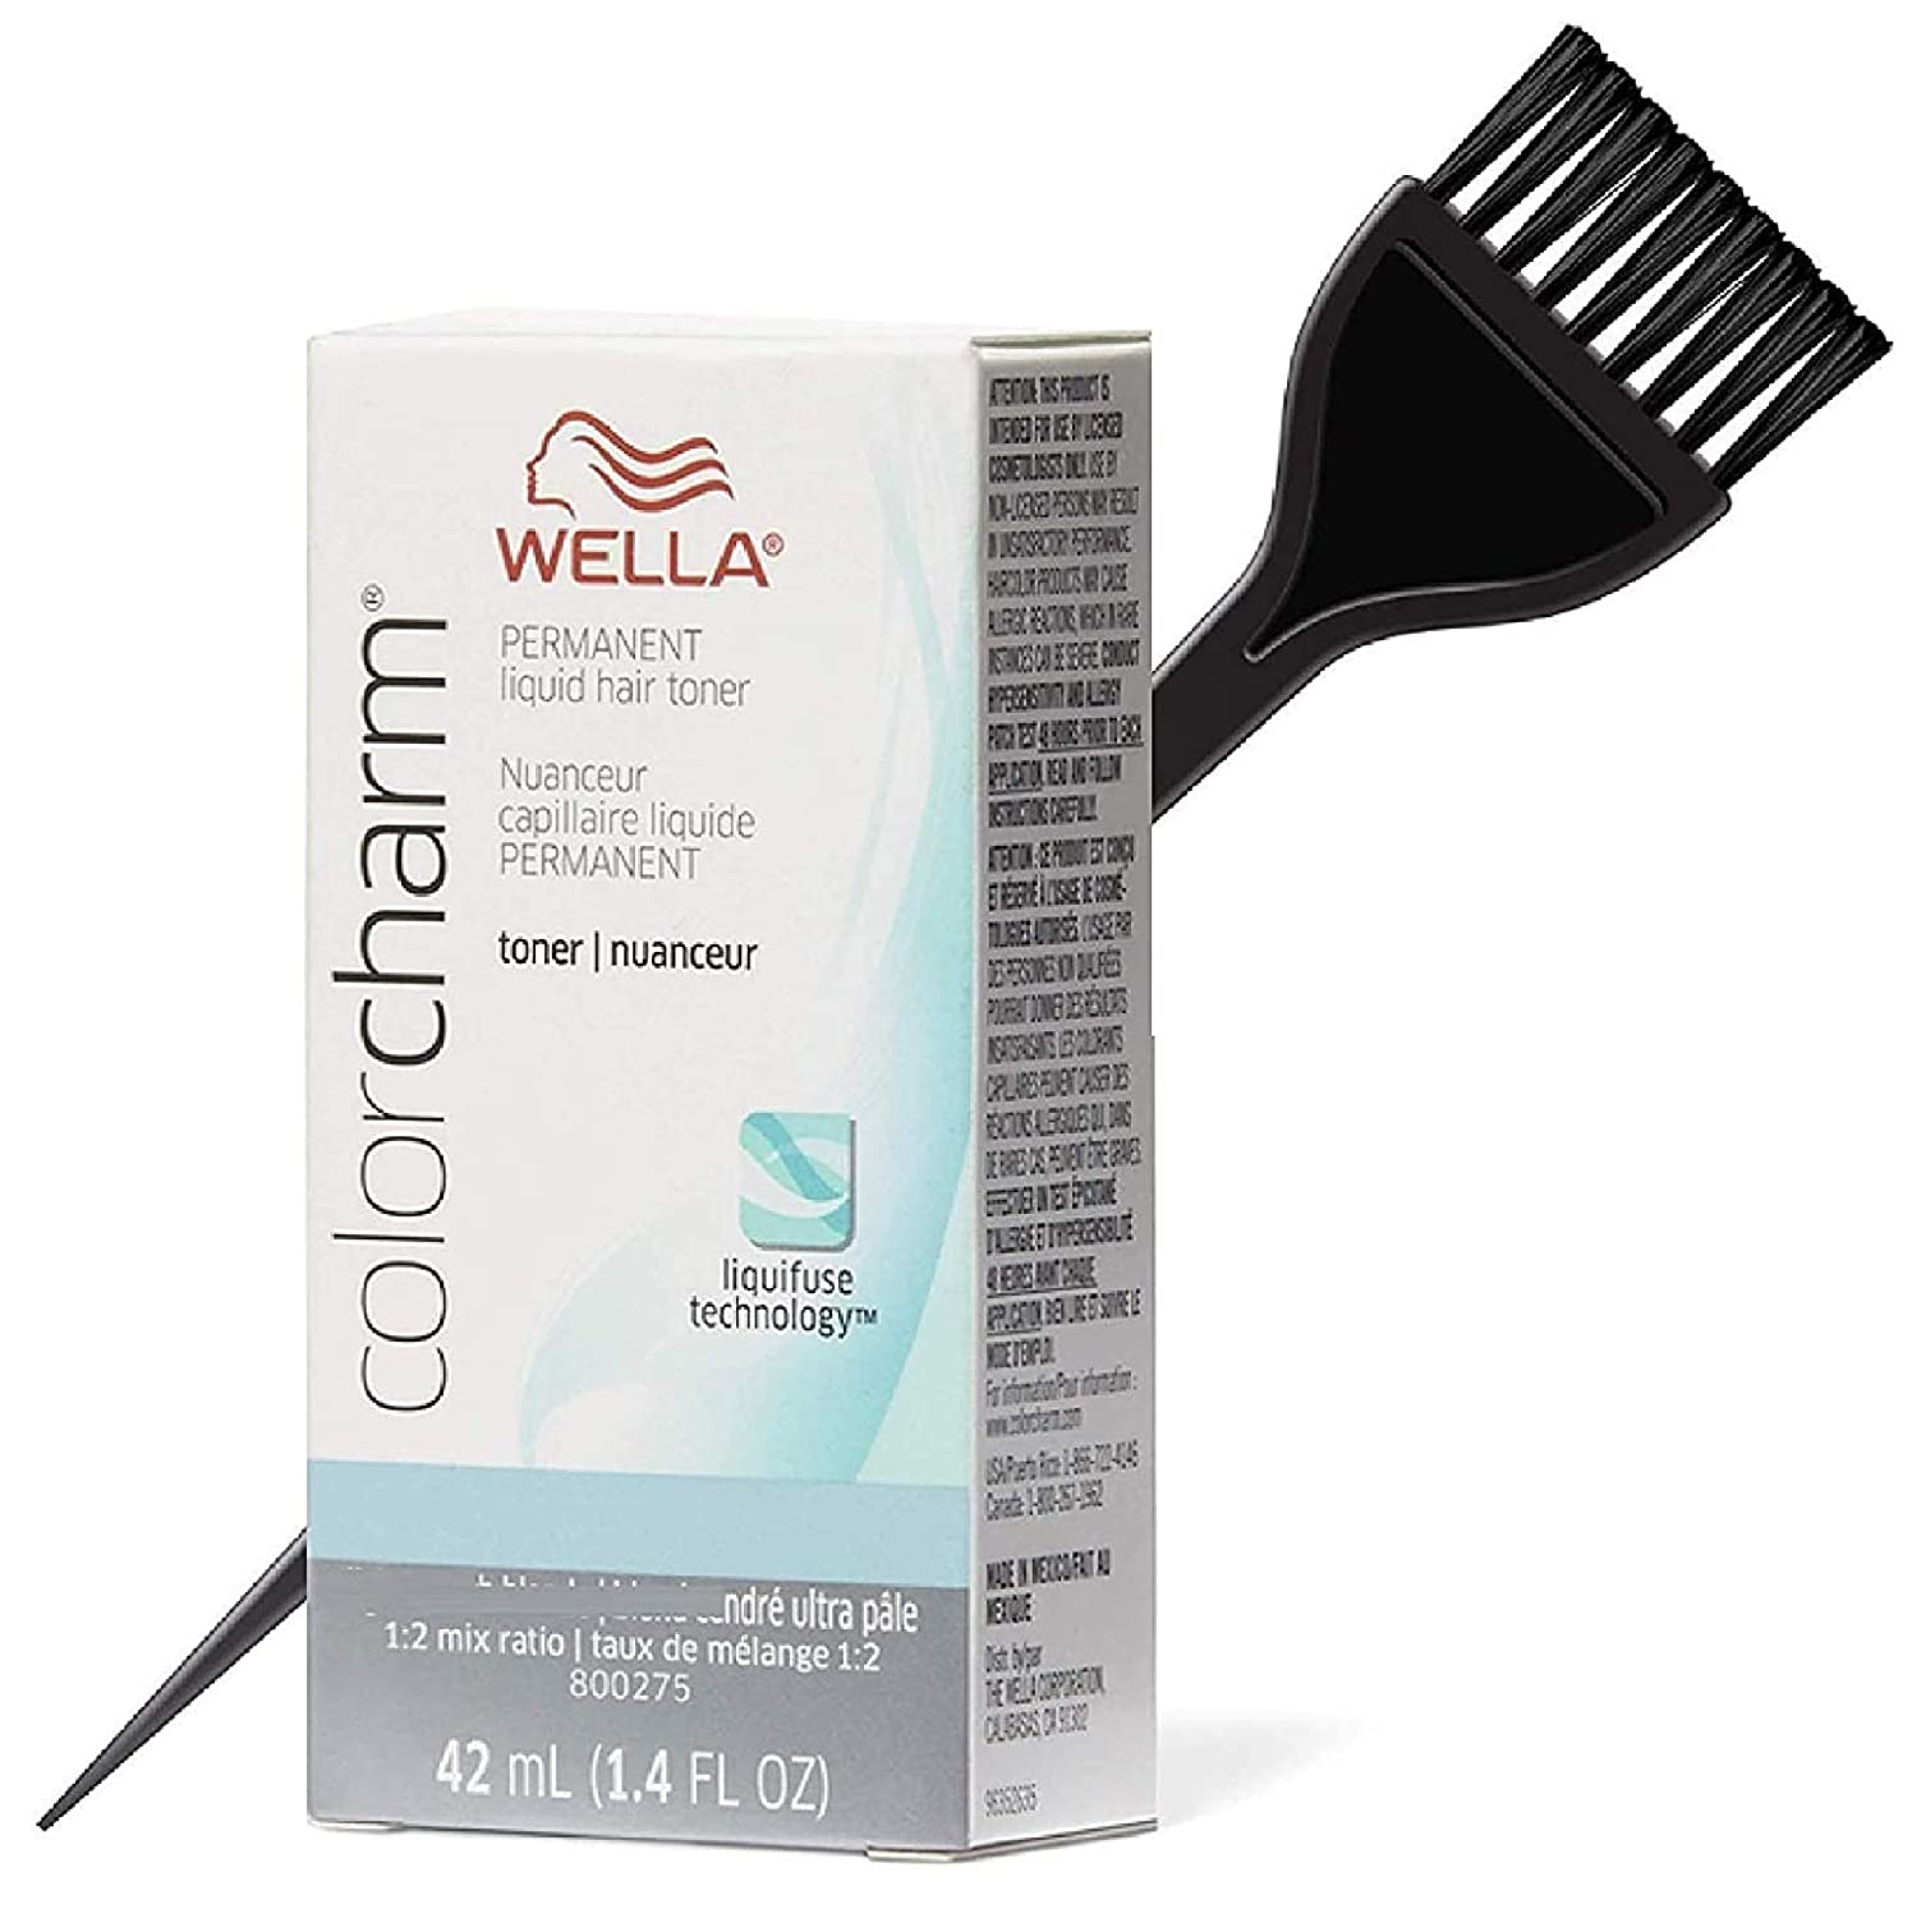 Wella COLOR CHARM Permanent LIQUID HAIR TONER (w/Sleek Tint Brush) Haircolor Liquifuse, 1:2 Mix Ratio Hair Color (T15 Pale Beige Blonde T-15) - image 1 of 1